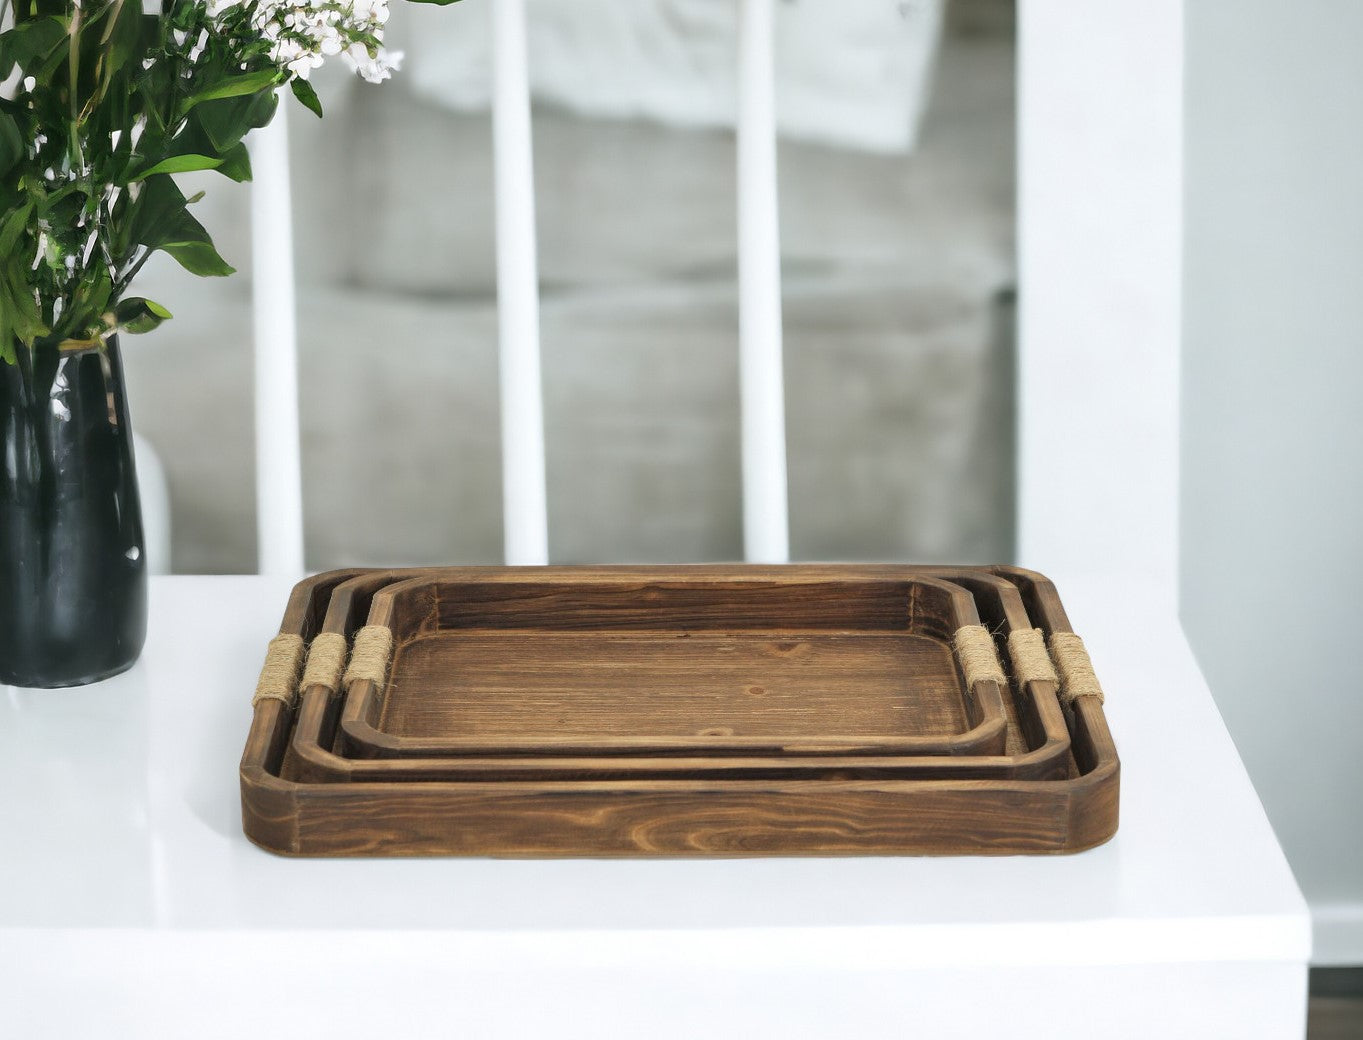 20" Brown Rectangular Wood Handmade Tray With Handles